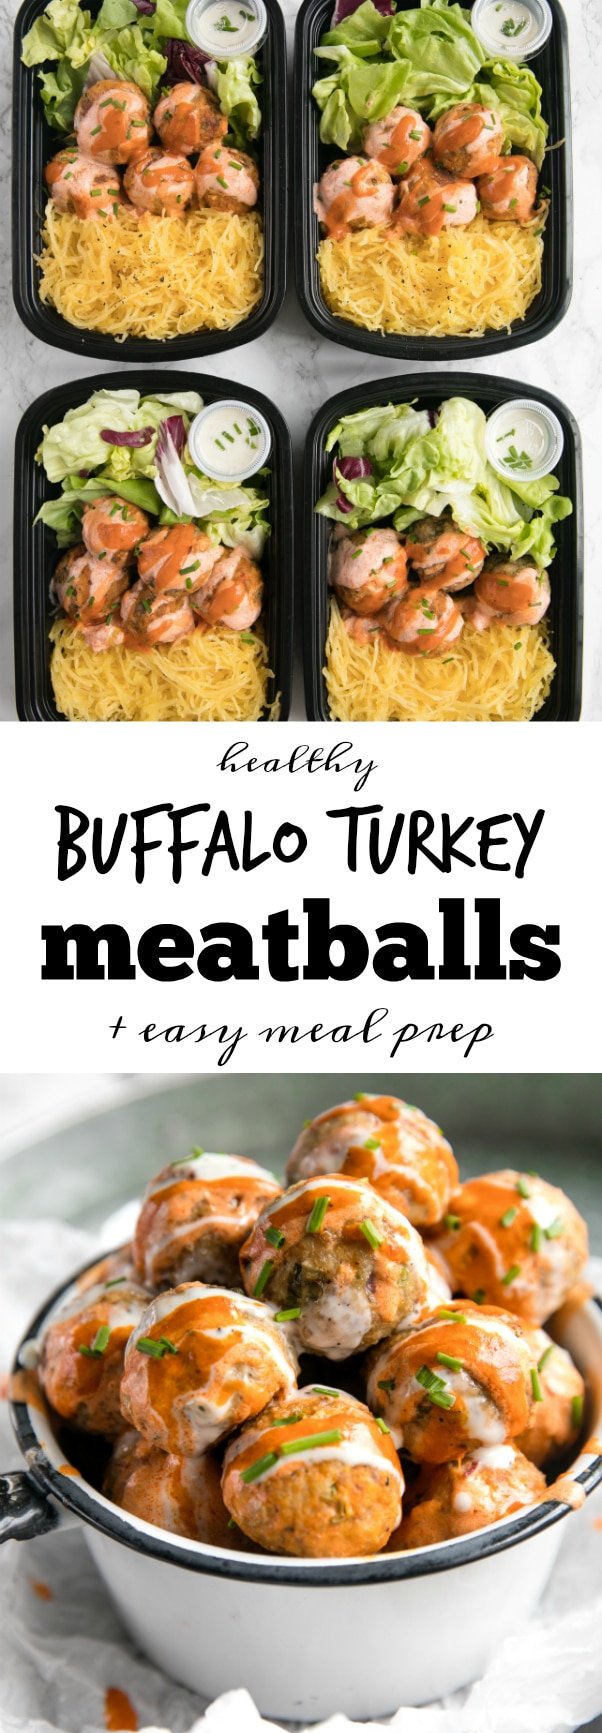 Healthy Buffalo Turkey Meatballs with Easy Meal Prep Bowls